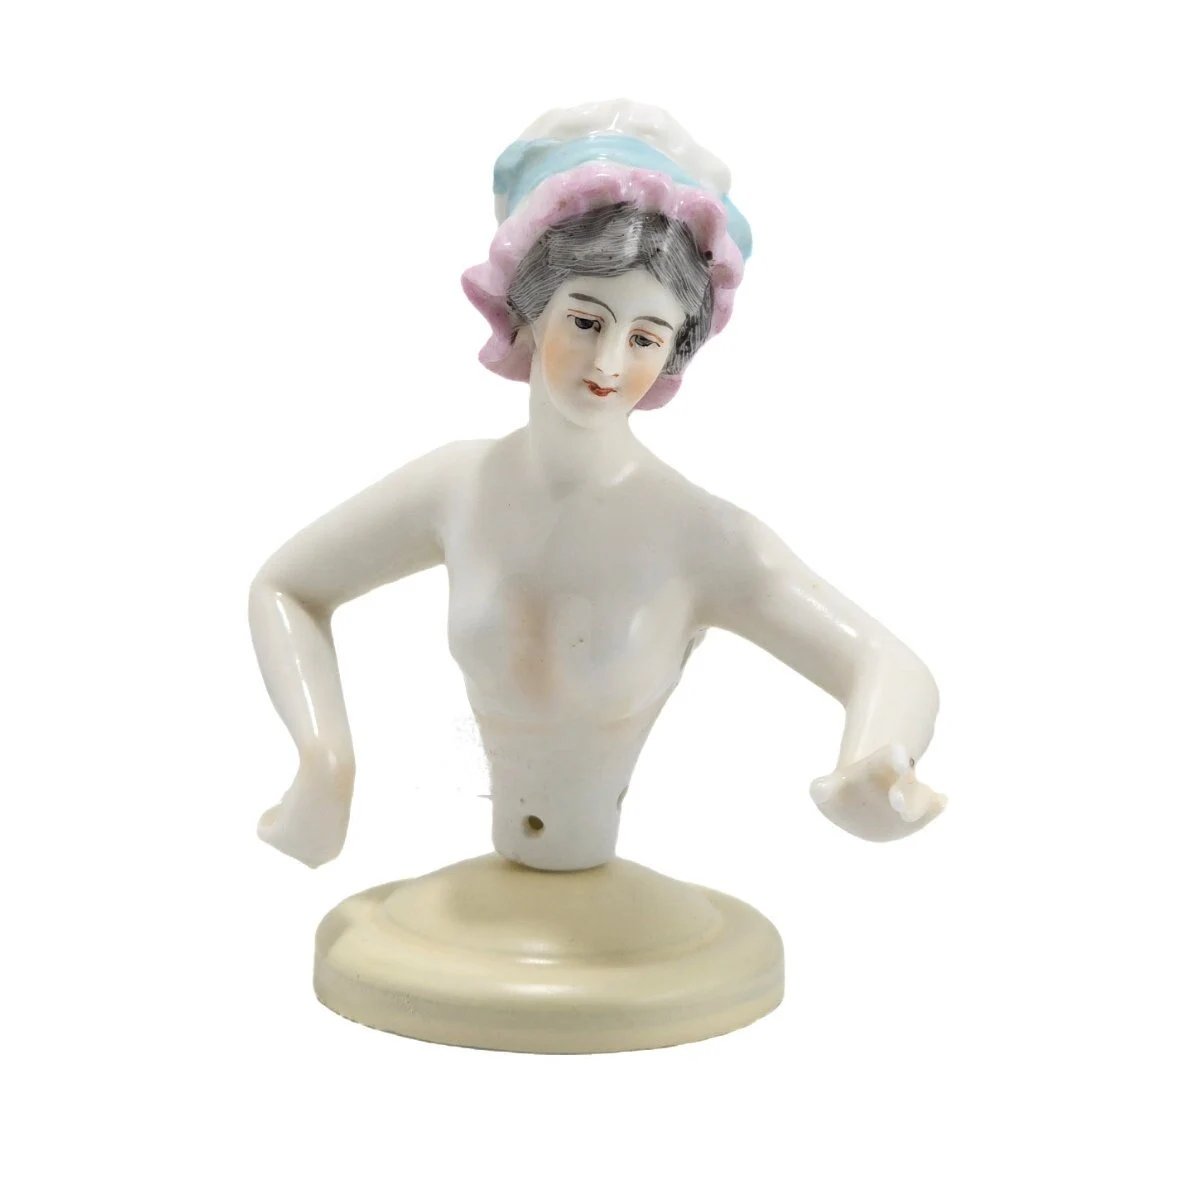 German Porcelain Half Doll 'Lady in Charlotte Bonnet' by Dressel & Kister etsy.me/4bvAfjM #porcelainhalfdoll #halfdolls #christiescurios #decor #shoppingonline #gifts #vintagestyle #Vintage_Treasures #antiques